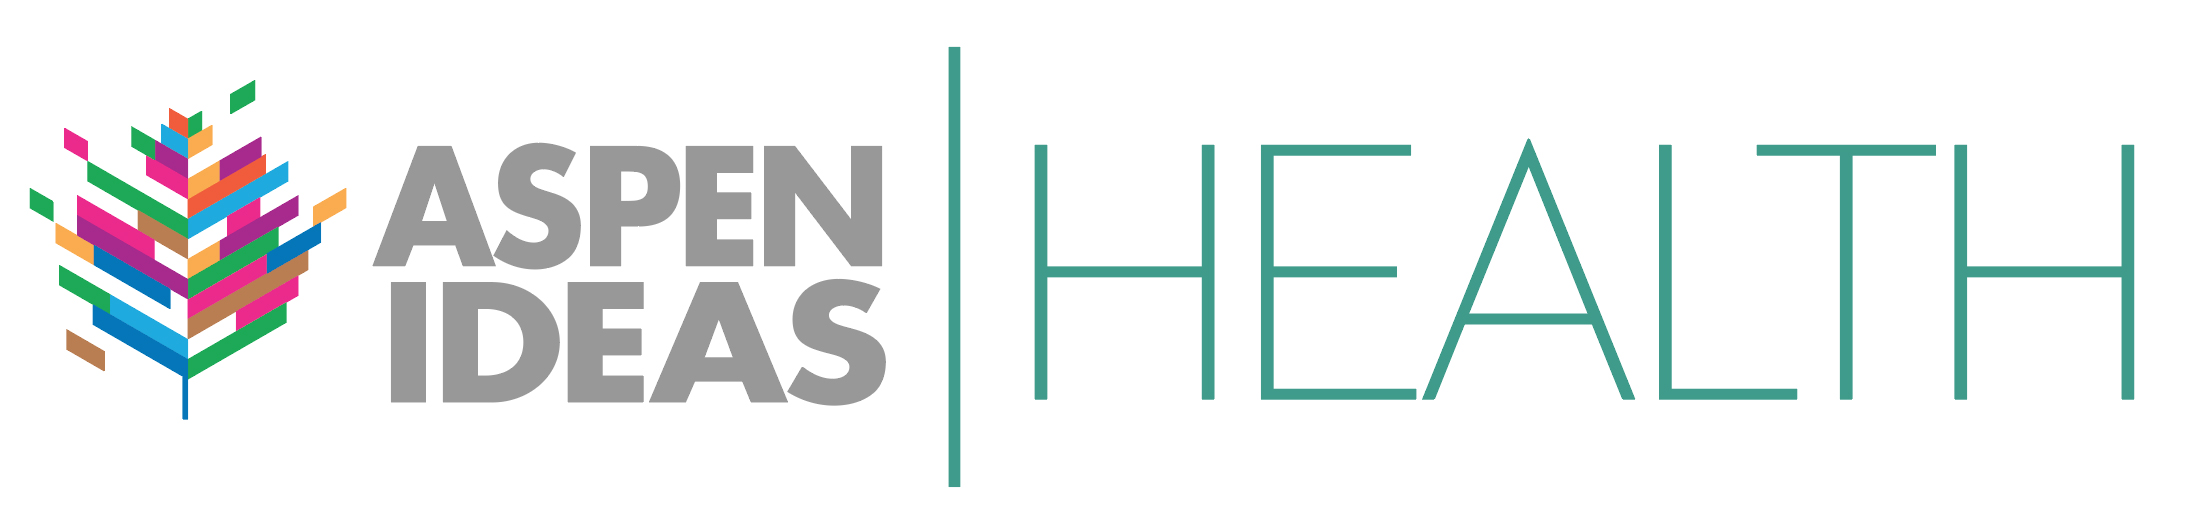 ASPEN-IDEAS-HEALTH logo